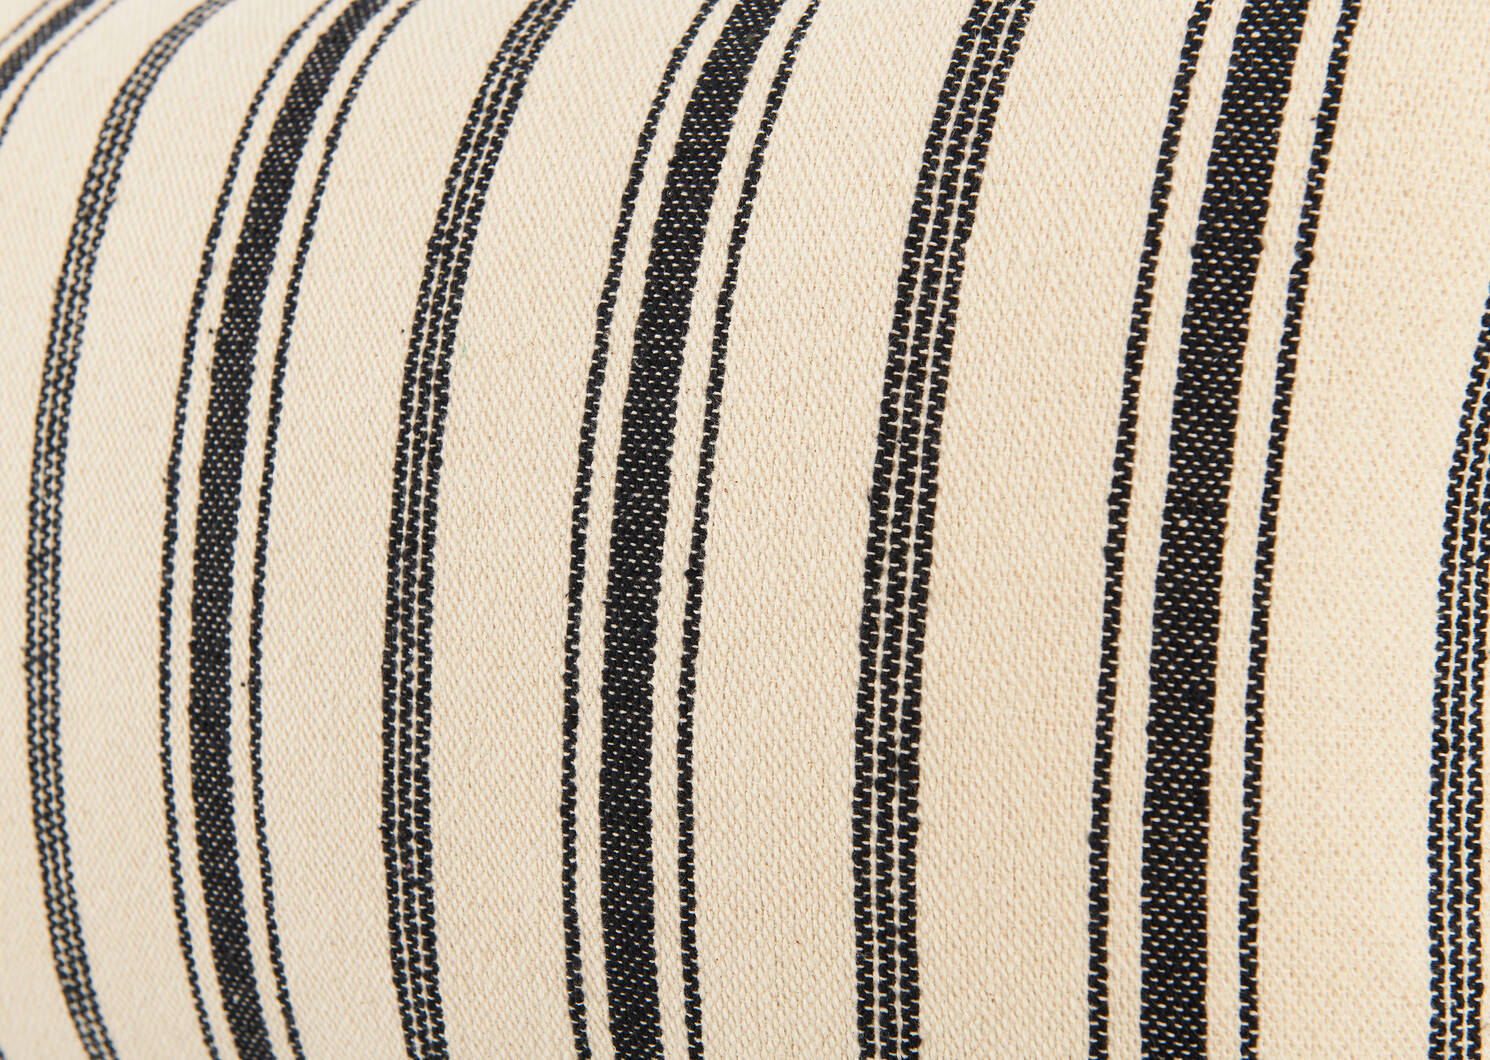 Hutton Striped Pillow 14x36 Ivory/Bla